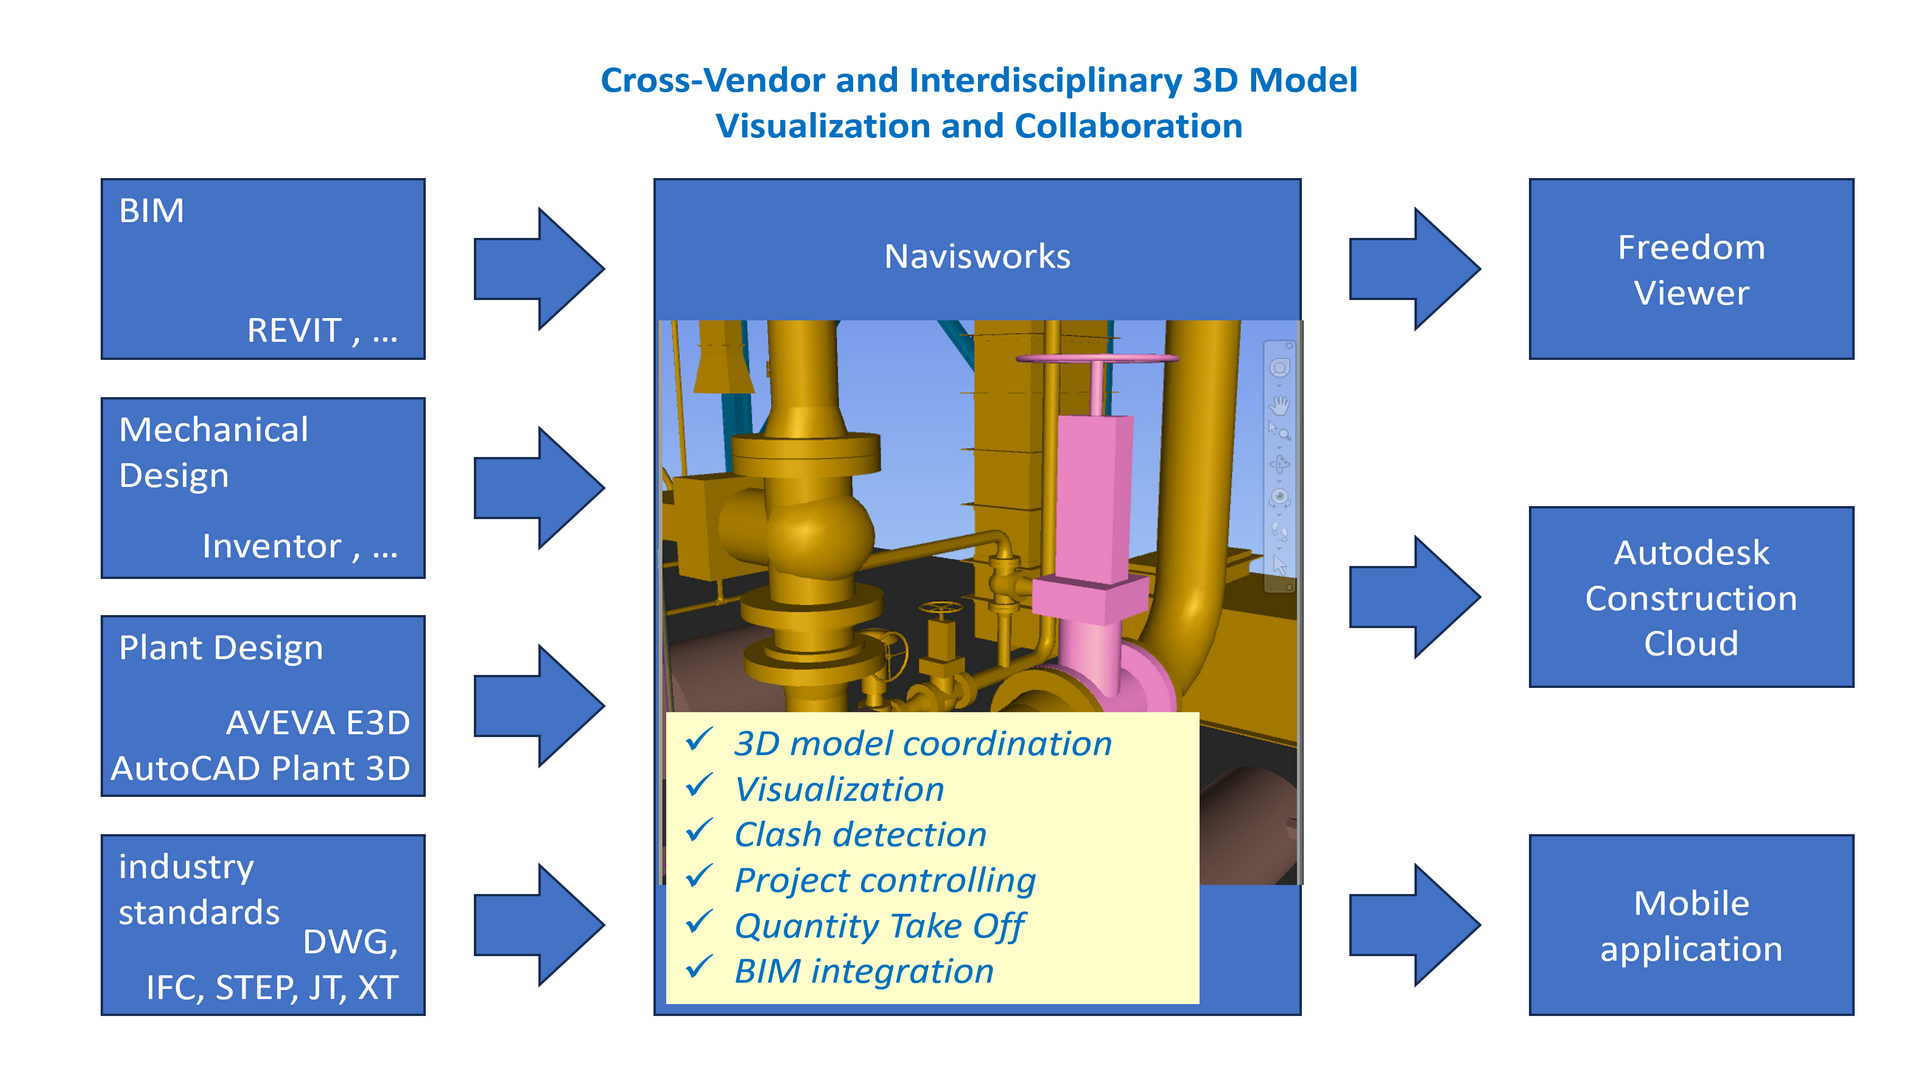 Cross-Vendor and Interdisciplinary 3D Model Visualization and Collaboration